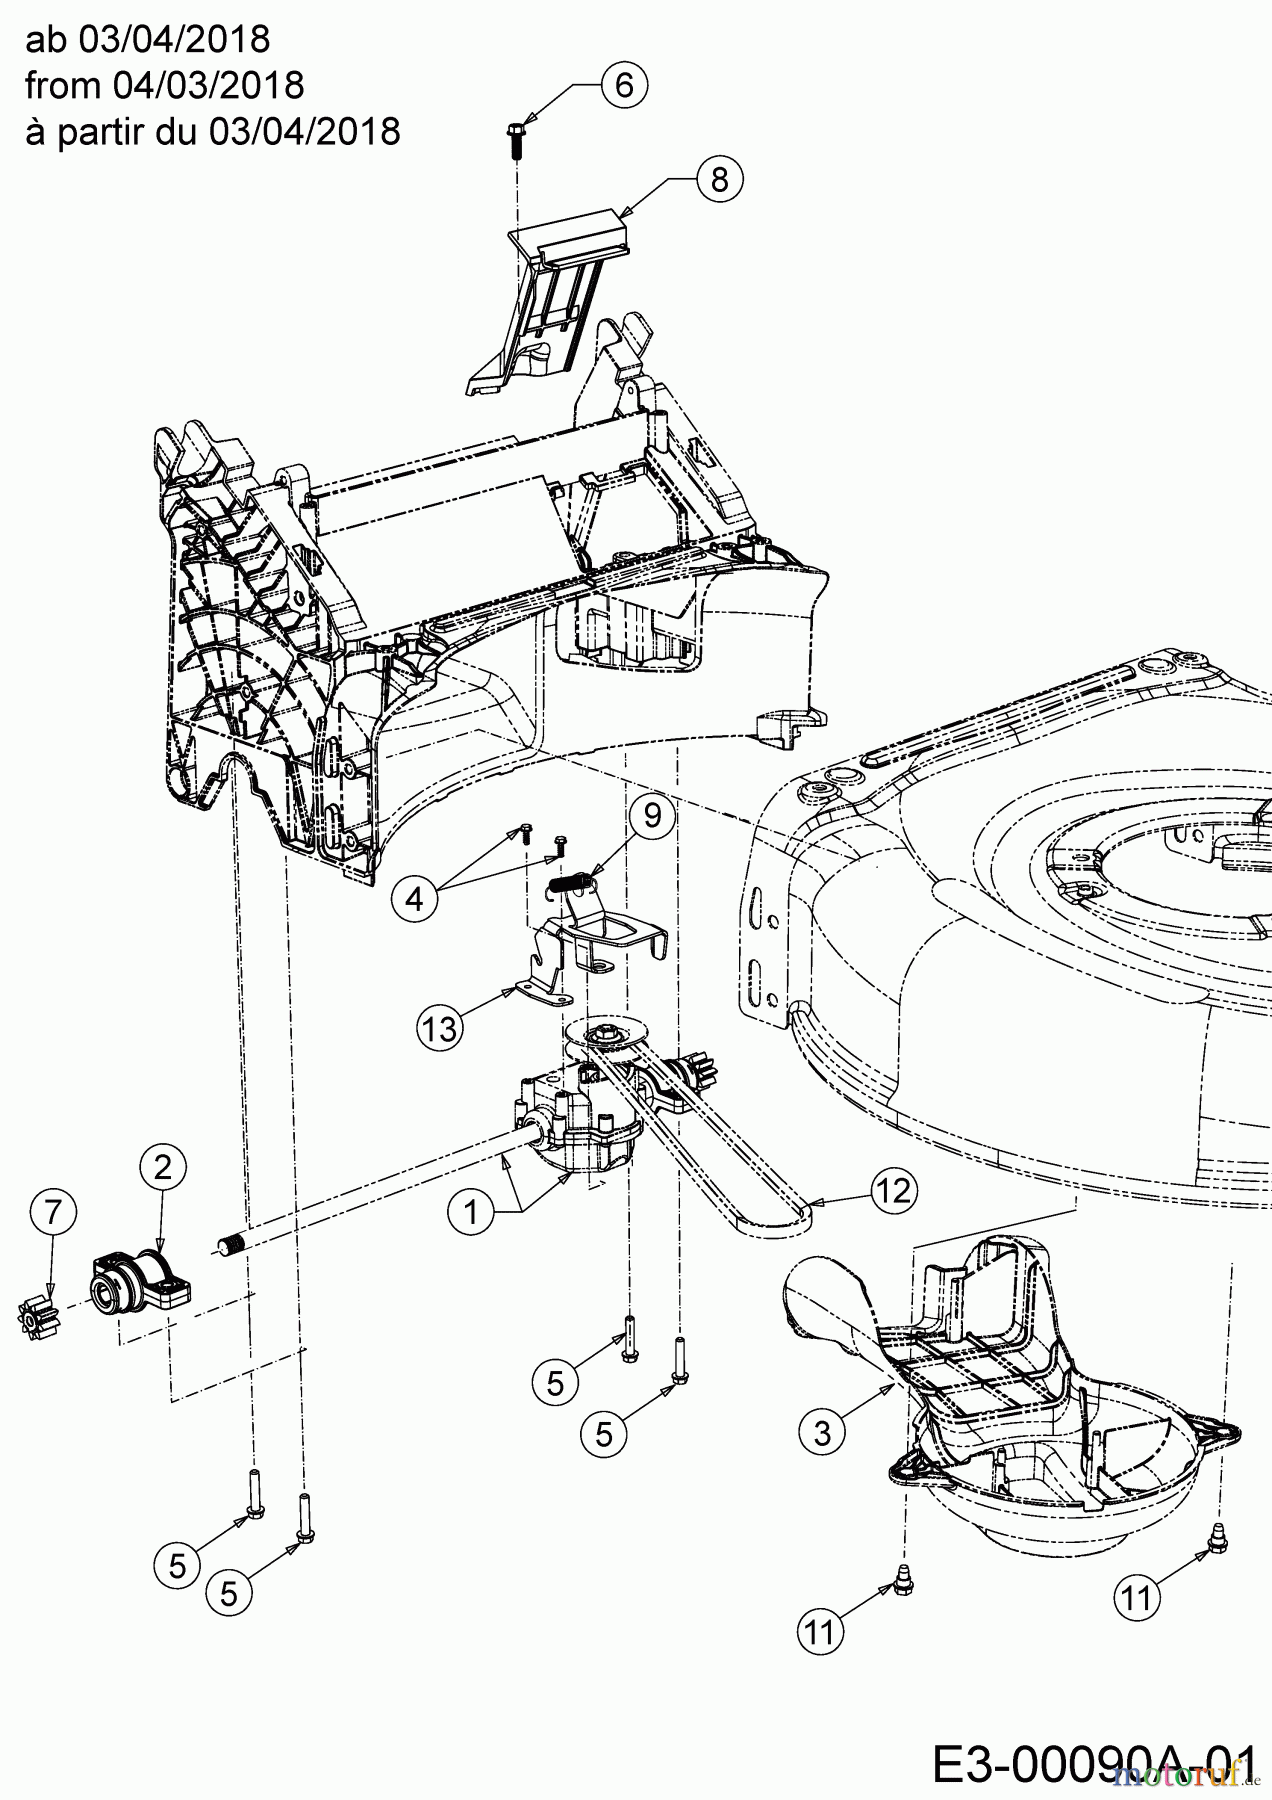  Mr.Gardener Petrol mower self propelled HW 53 BA-2 12B-PN7B629  (2019) Gearbox, Belt from 04/03/2018